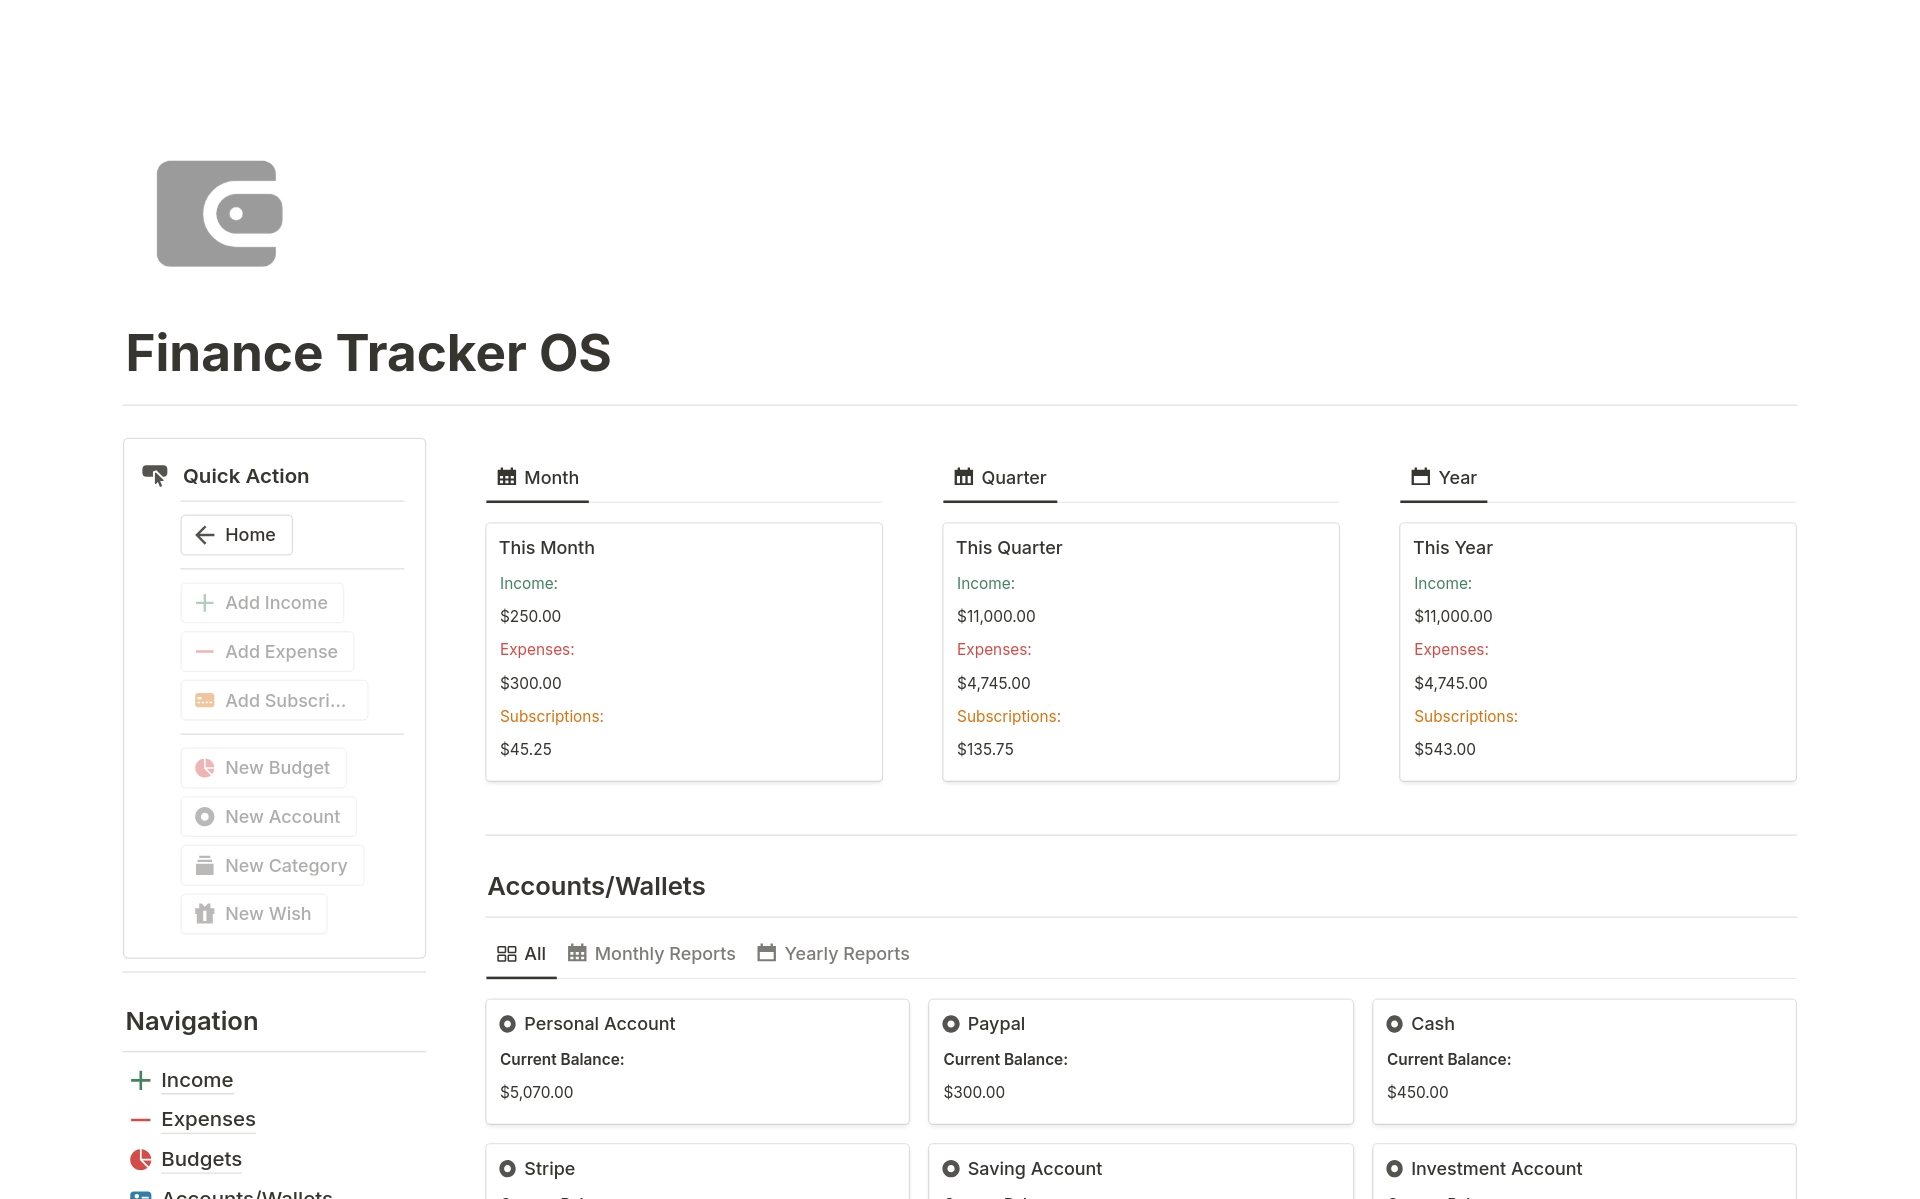 Aperçu du modèle de Finance Tracker OS